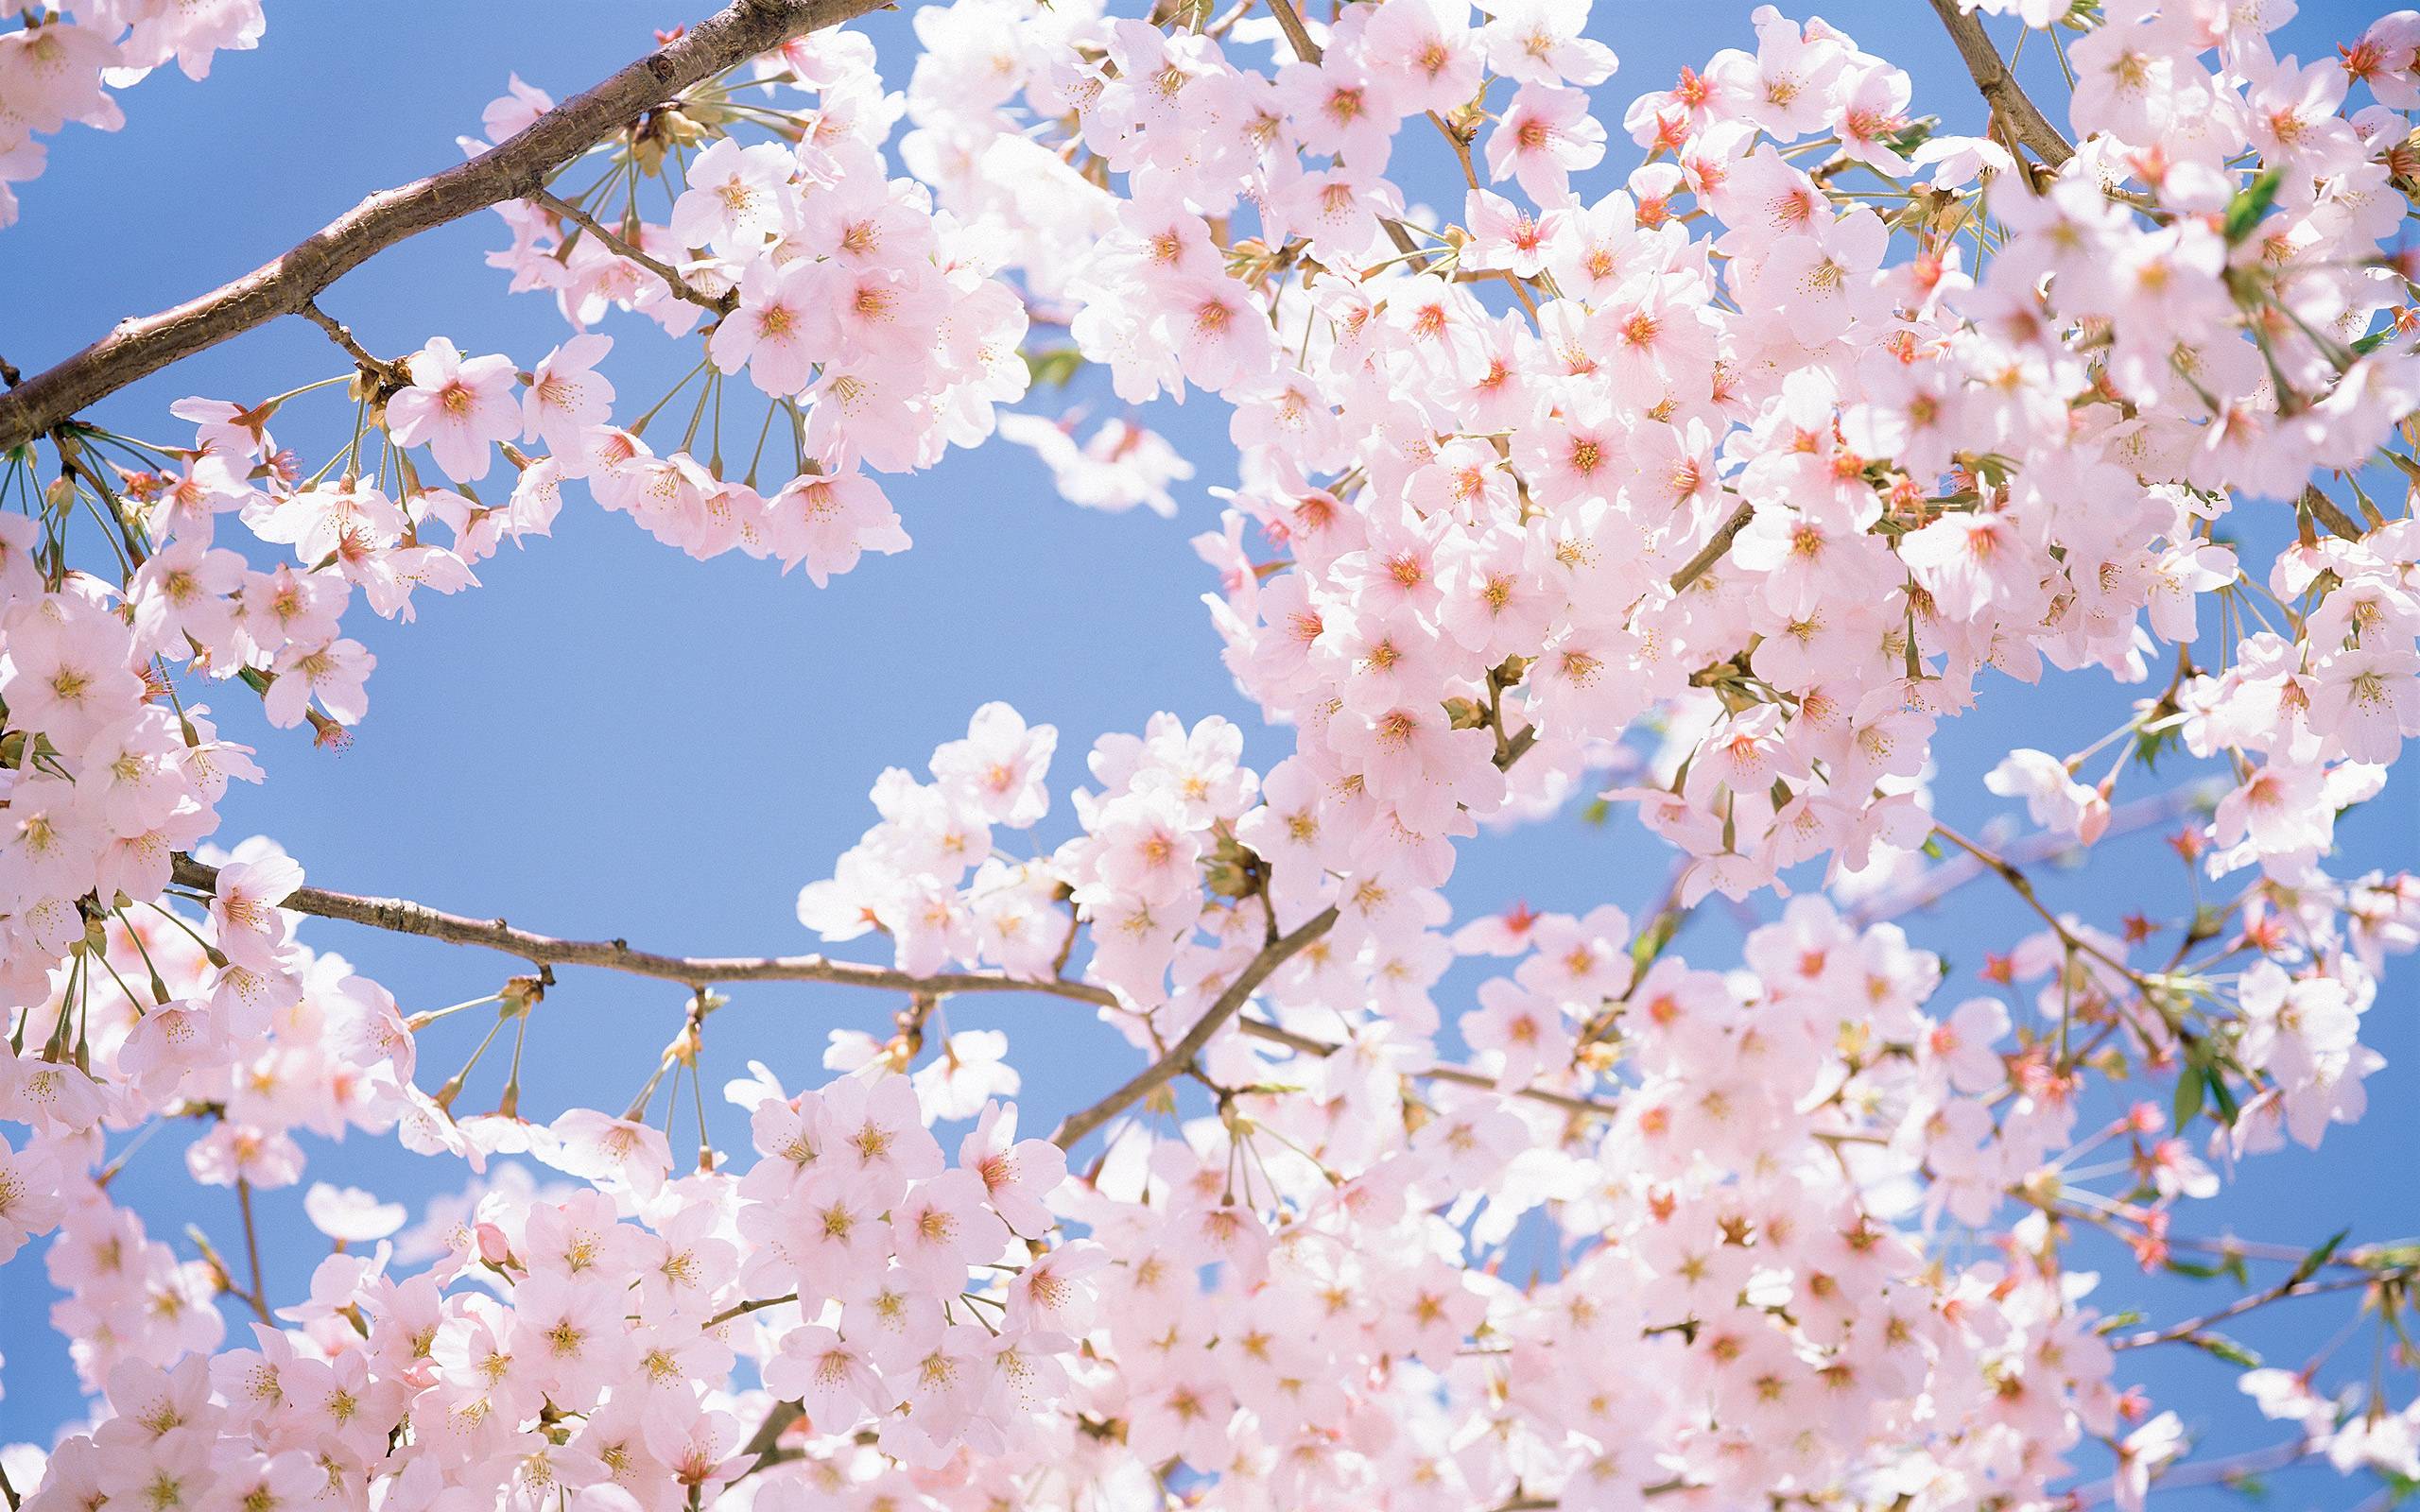 Wallpaper For > Cherry Blossom iPhone Wallpaper